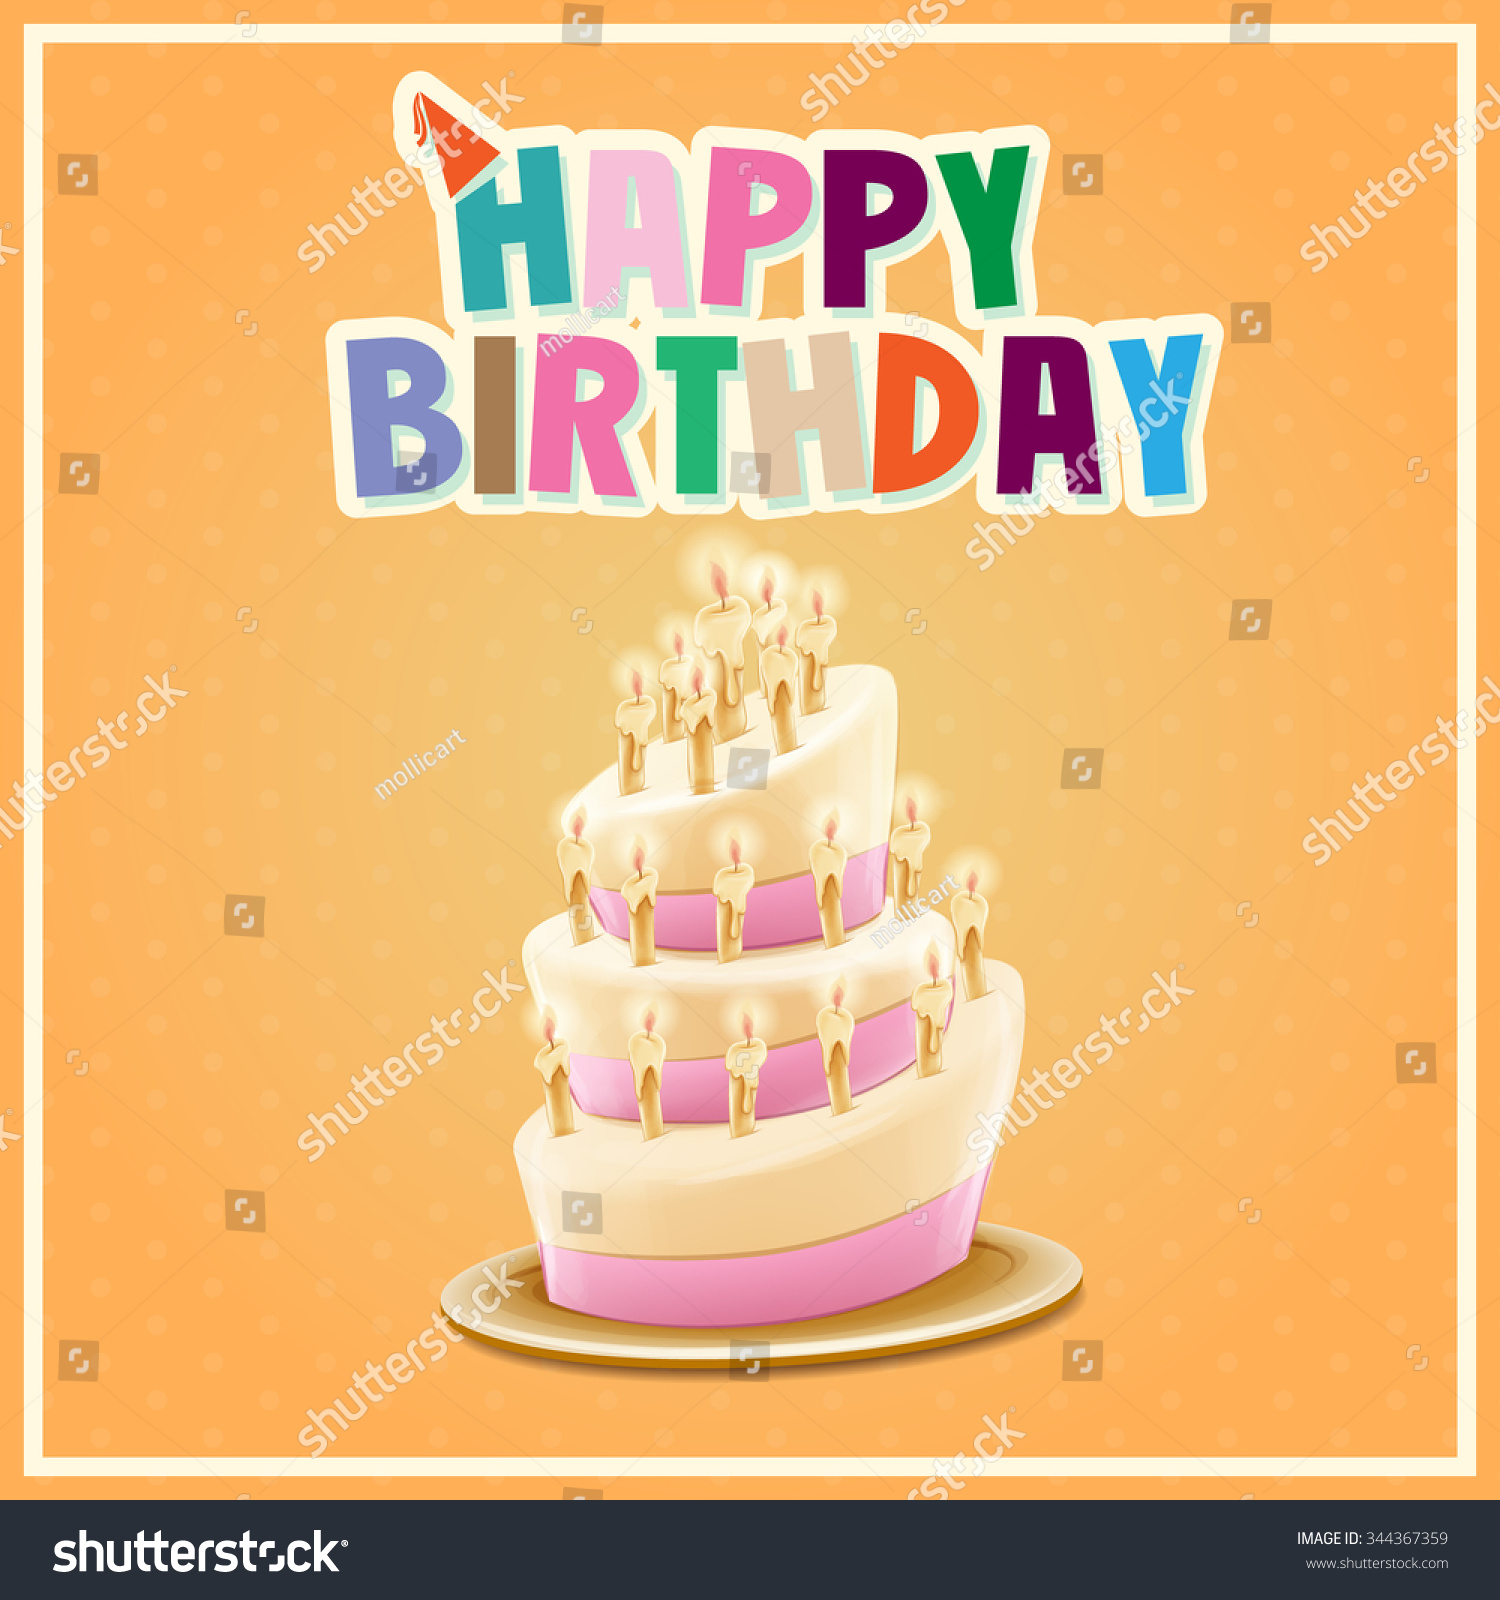 Cake Happy Birthday Stock Vector 344367359 : Shutterstock